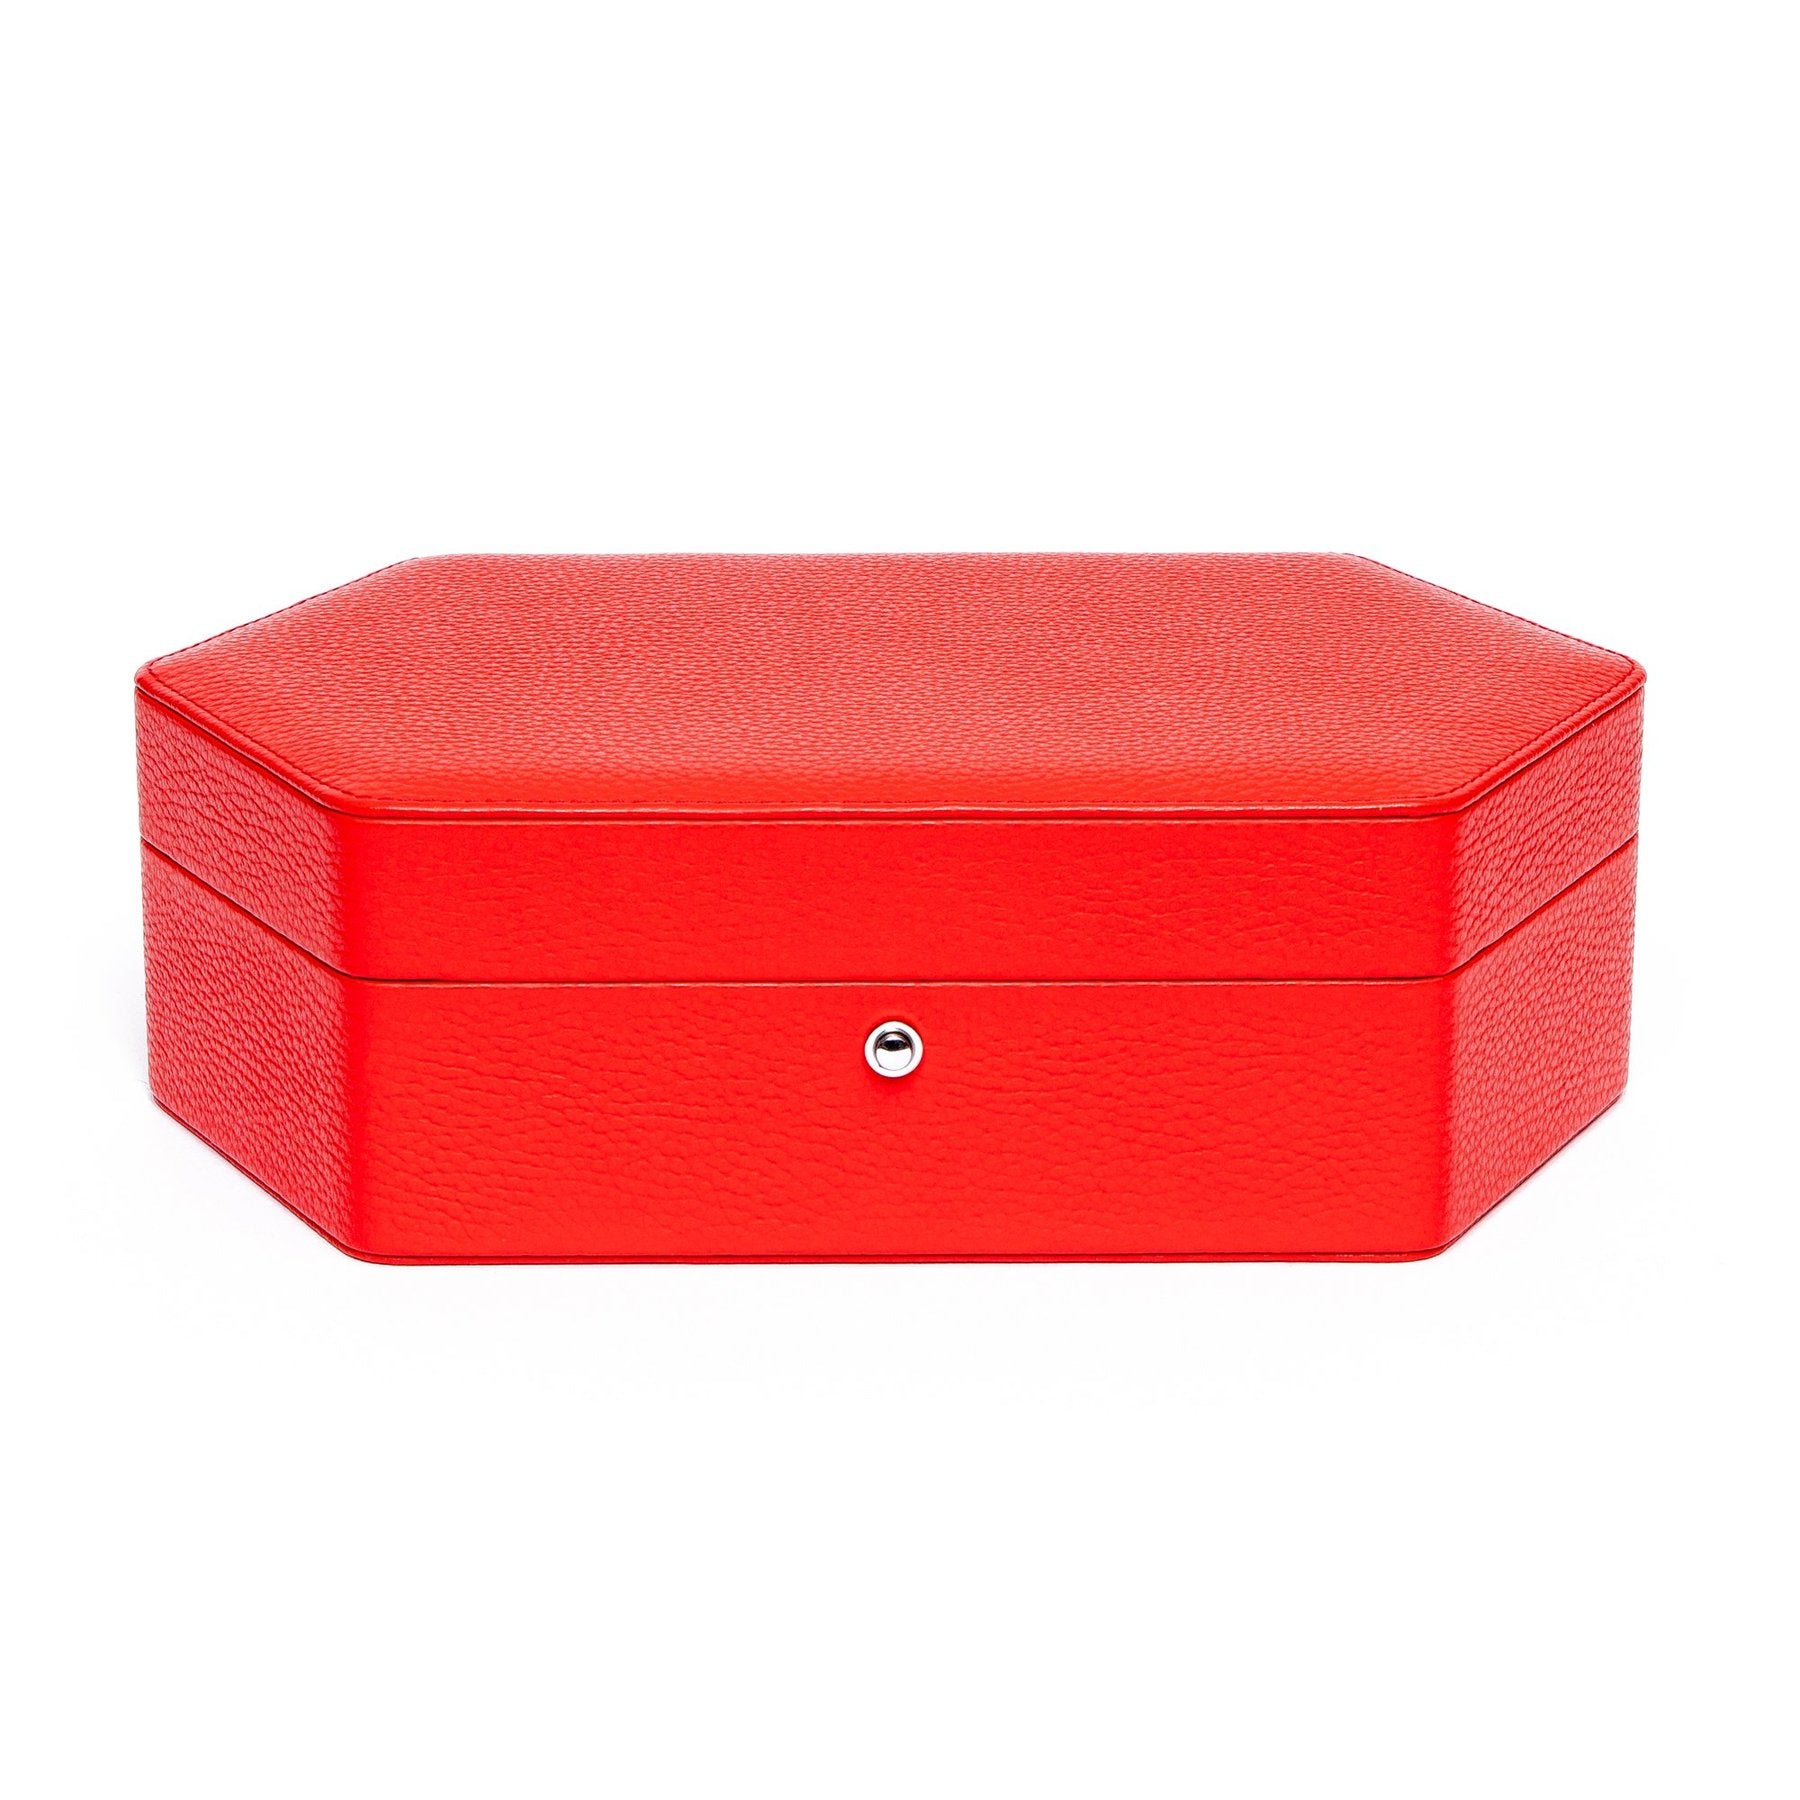 Rapport Portobello Watch Box in Red Leather TA42 - Watchwindersplus